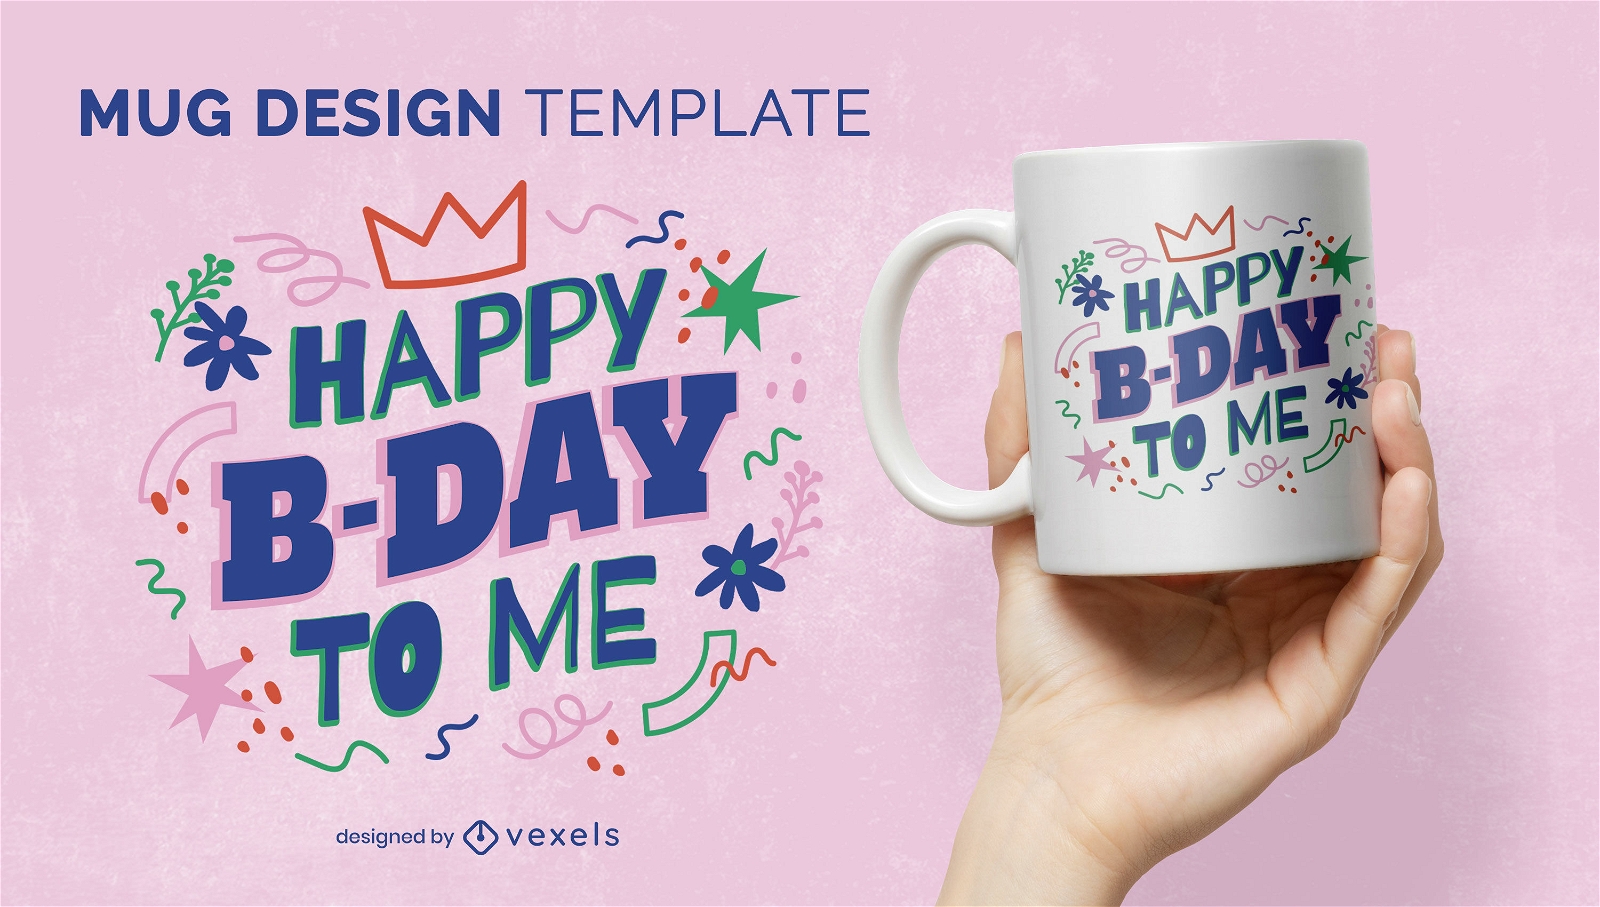 Happy b-day to me mug design